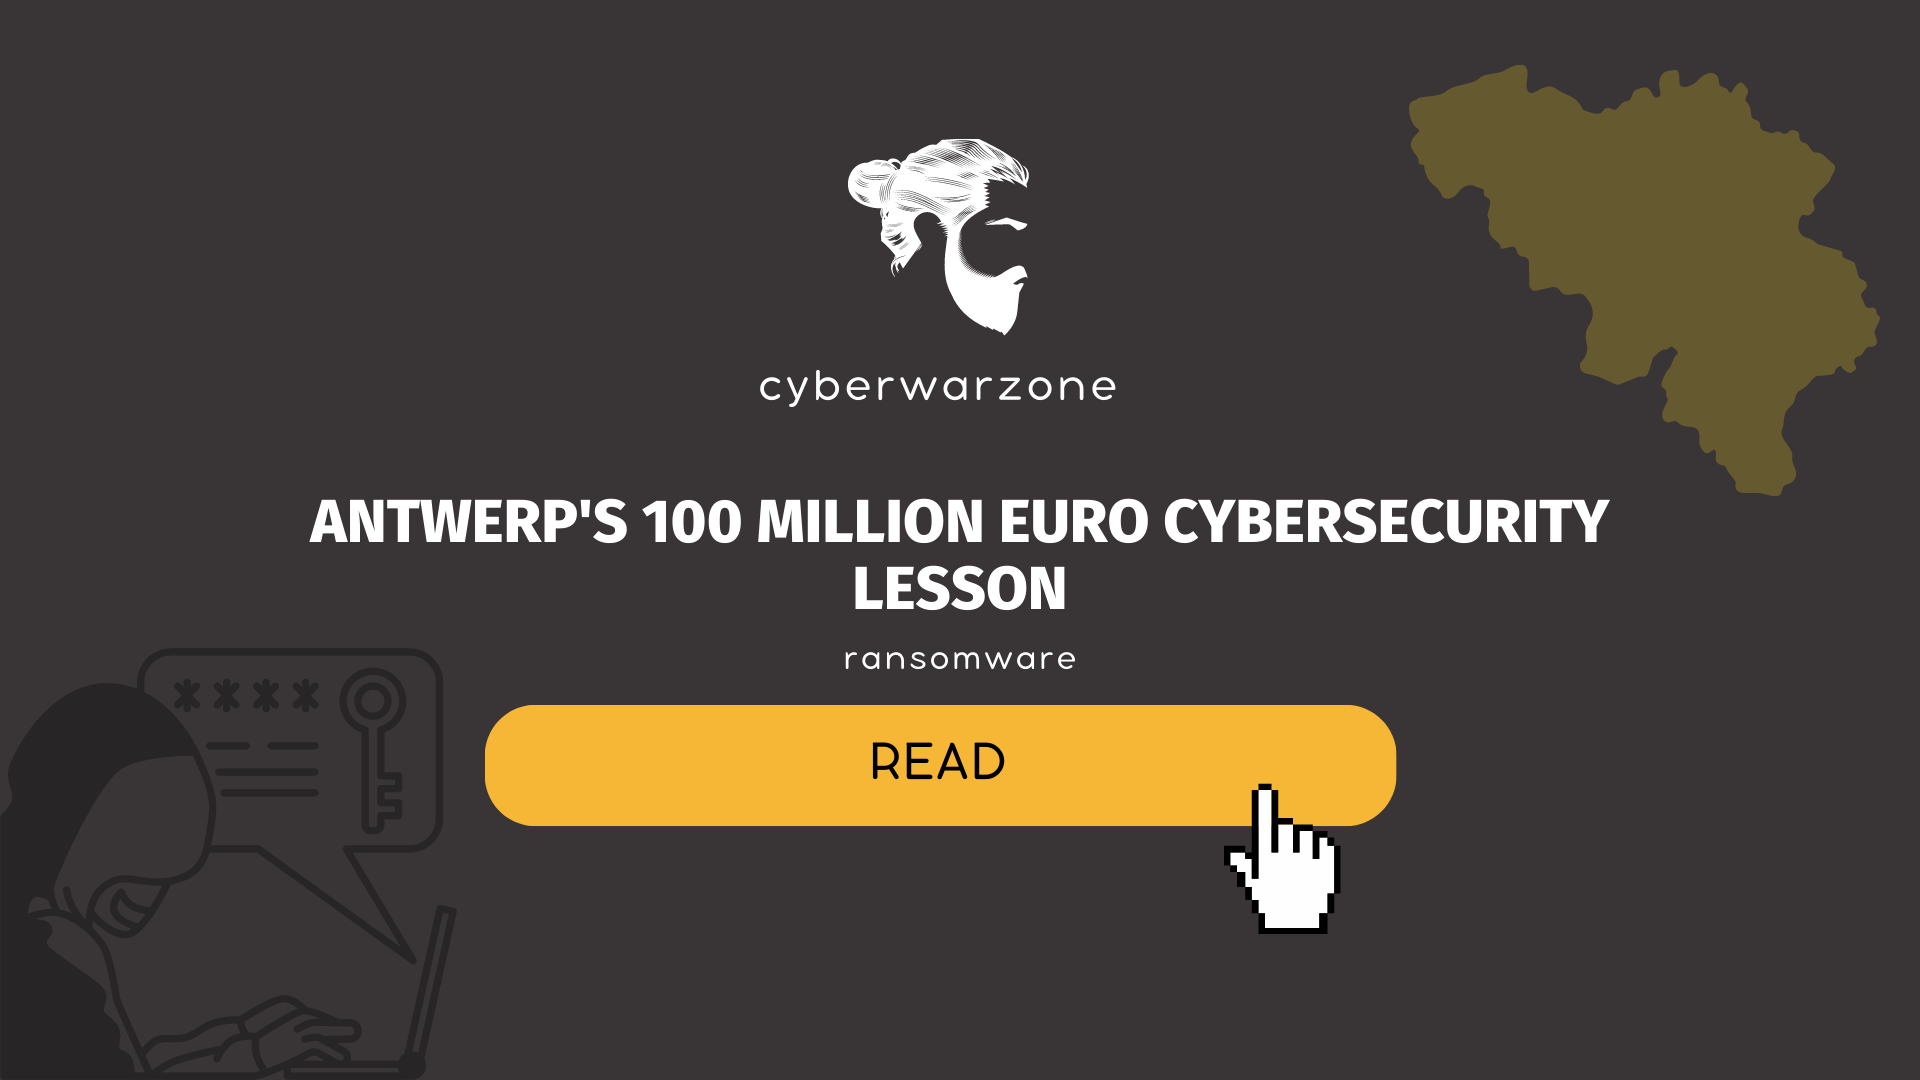 Antwerp's 100 Million Euro Cybersecurity Lesson